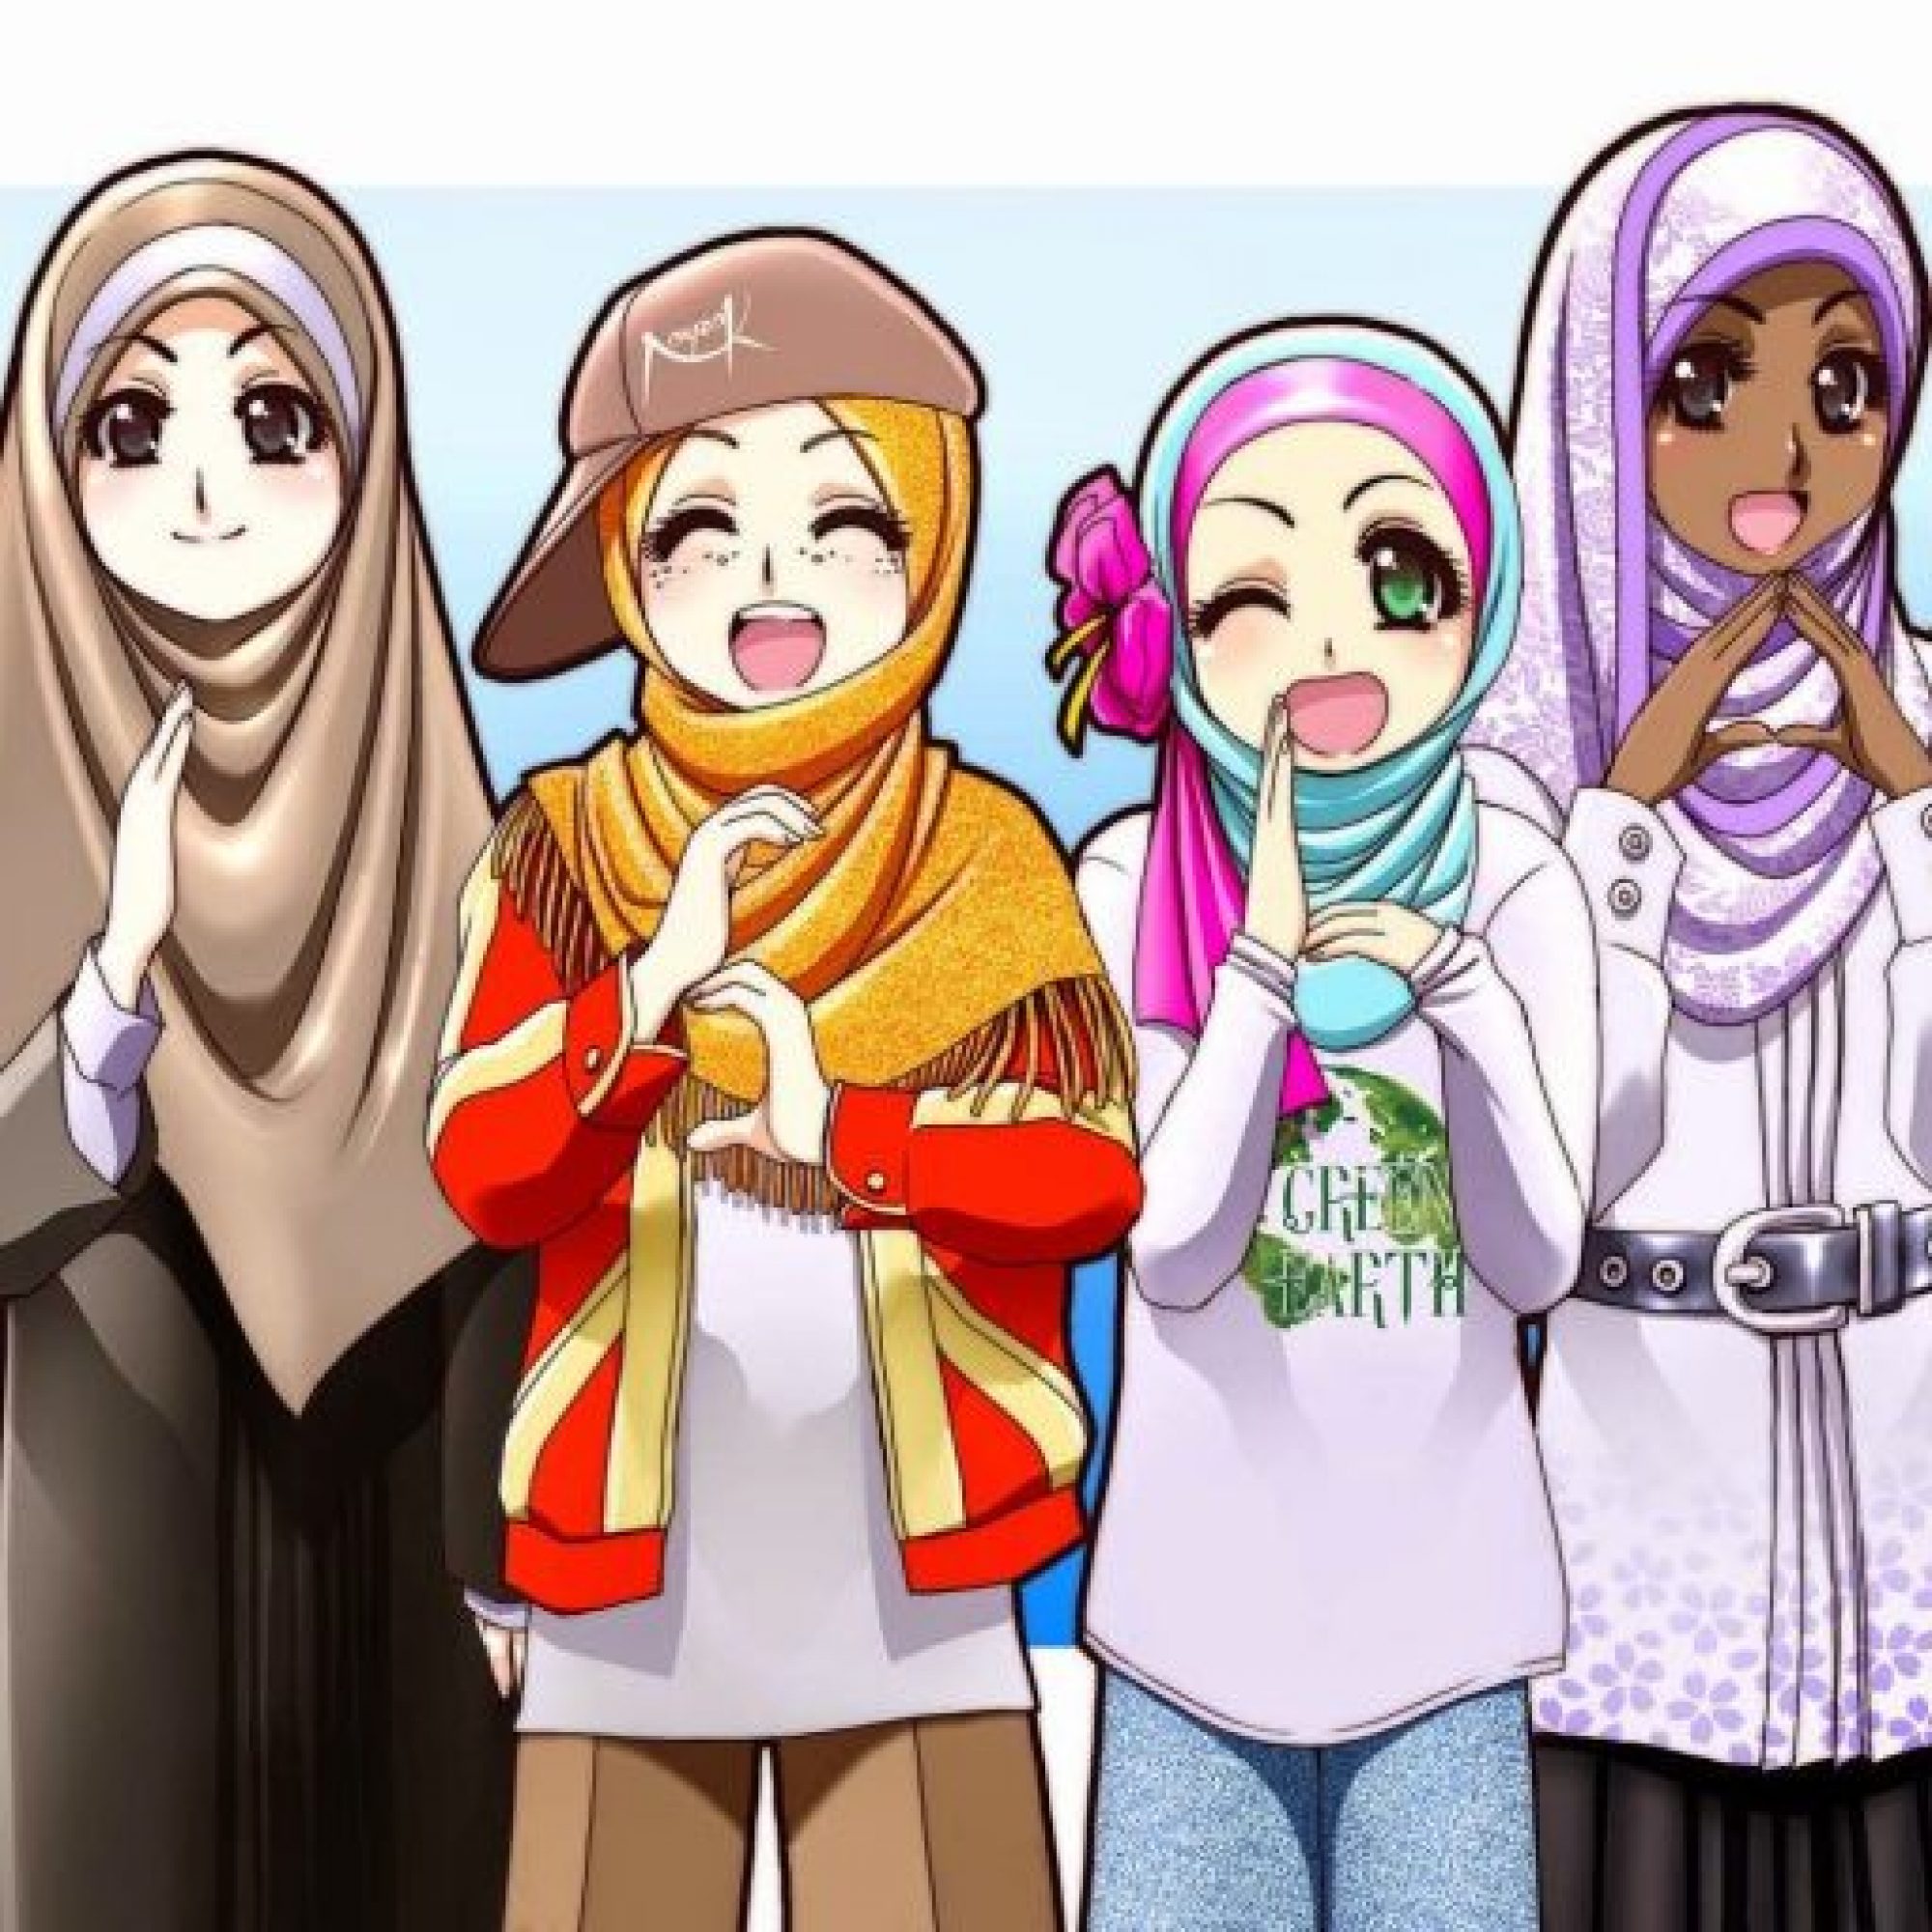 Busana Muslim Terbaru Pria Maupun Wanita Berbusana Harus Syari